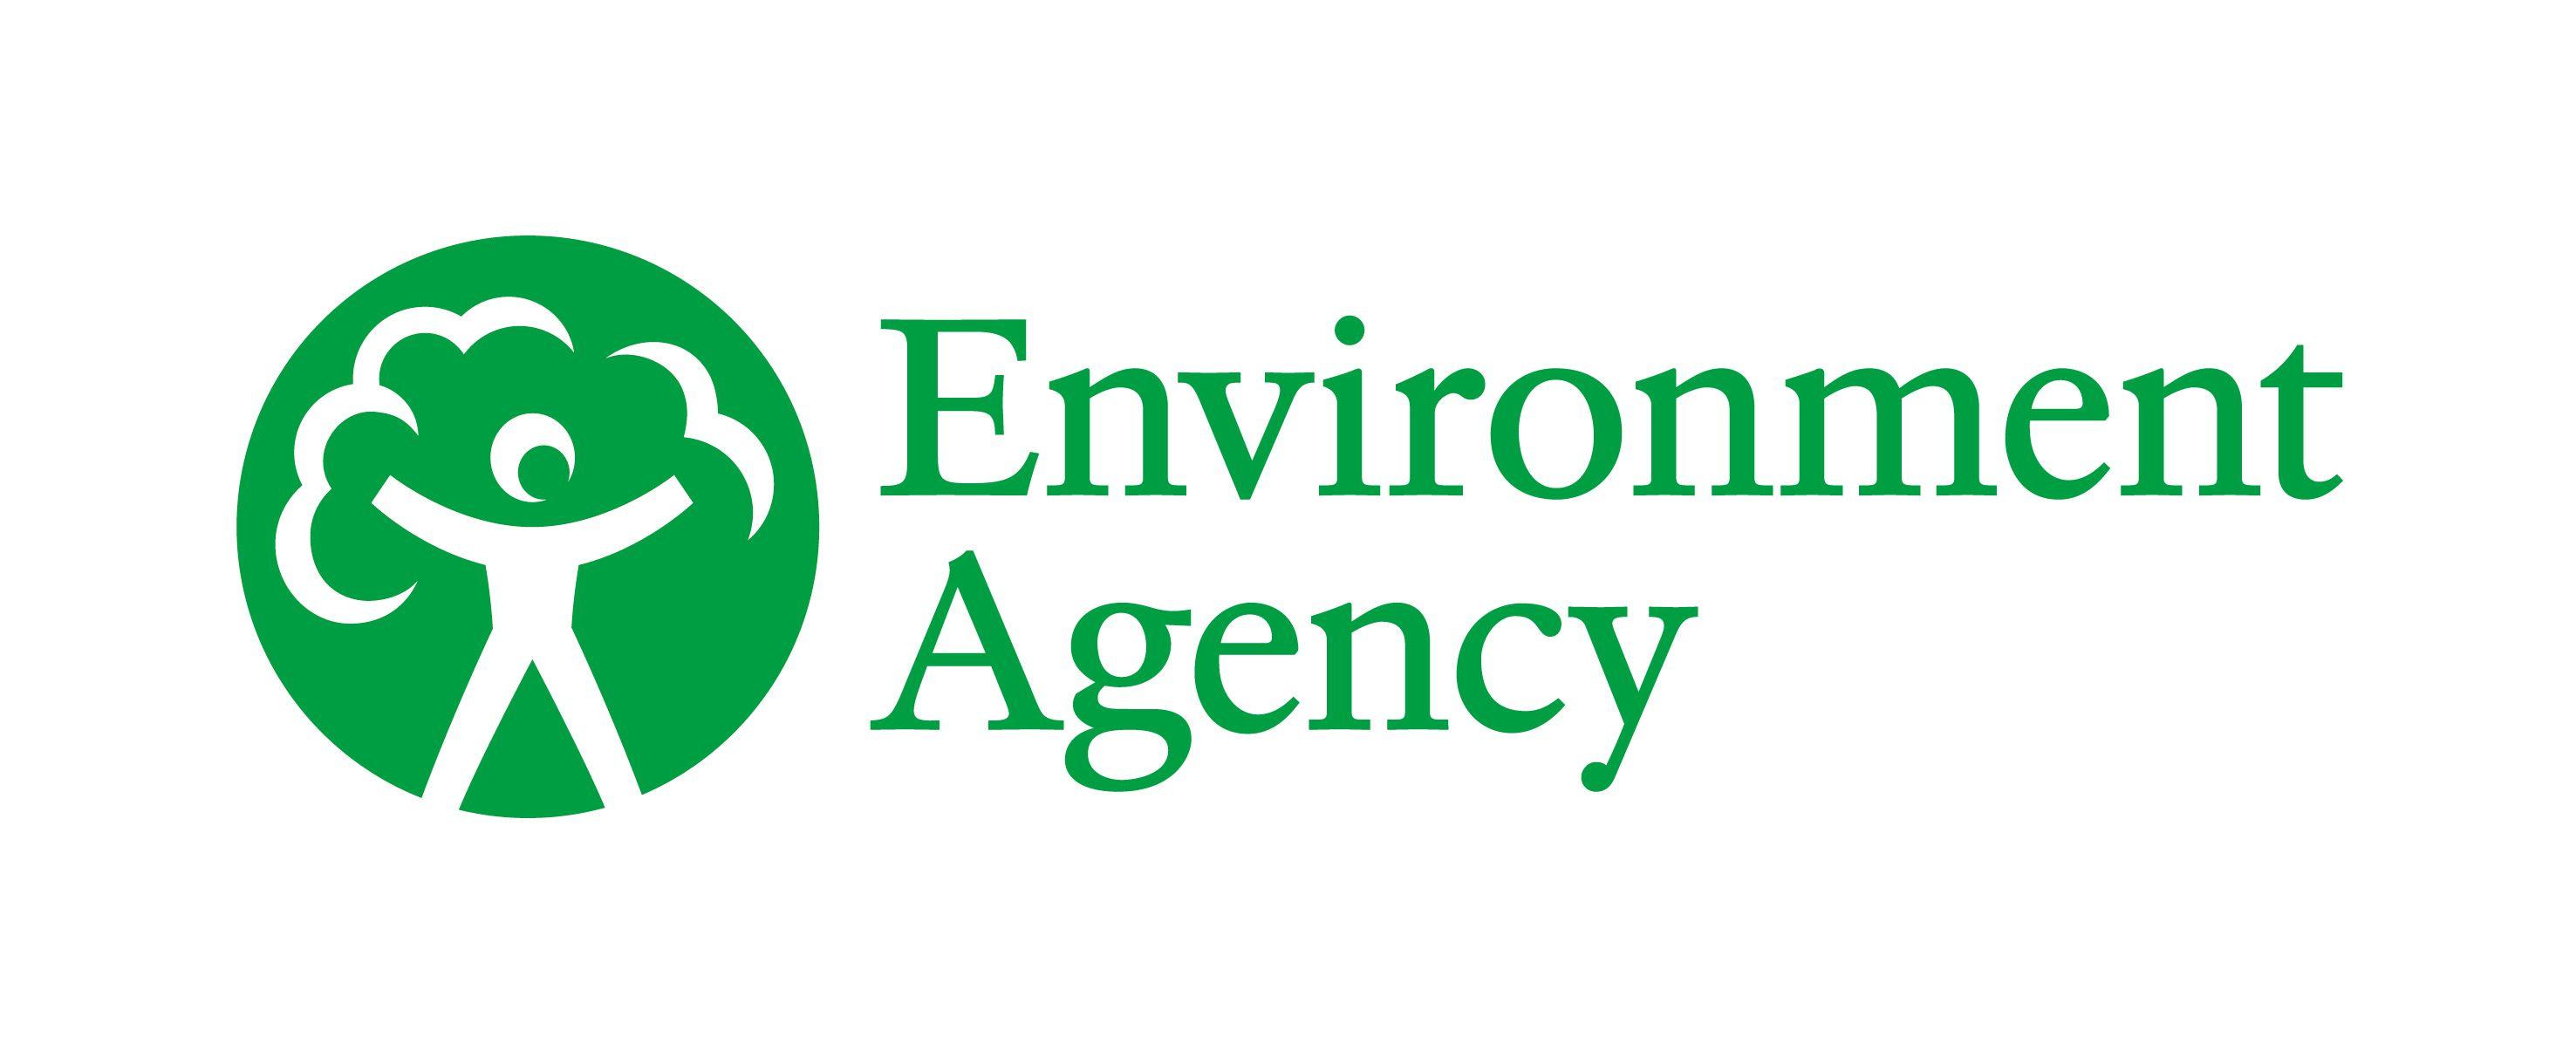 Governmental Organization Logo - Environment Agency